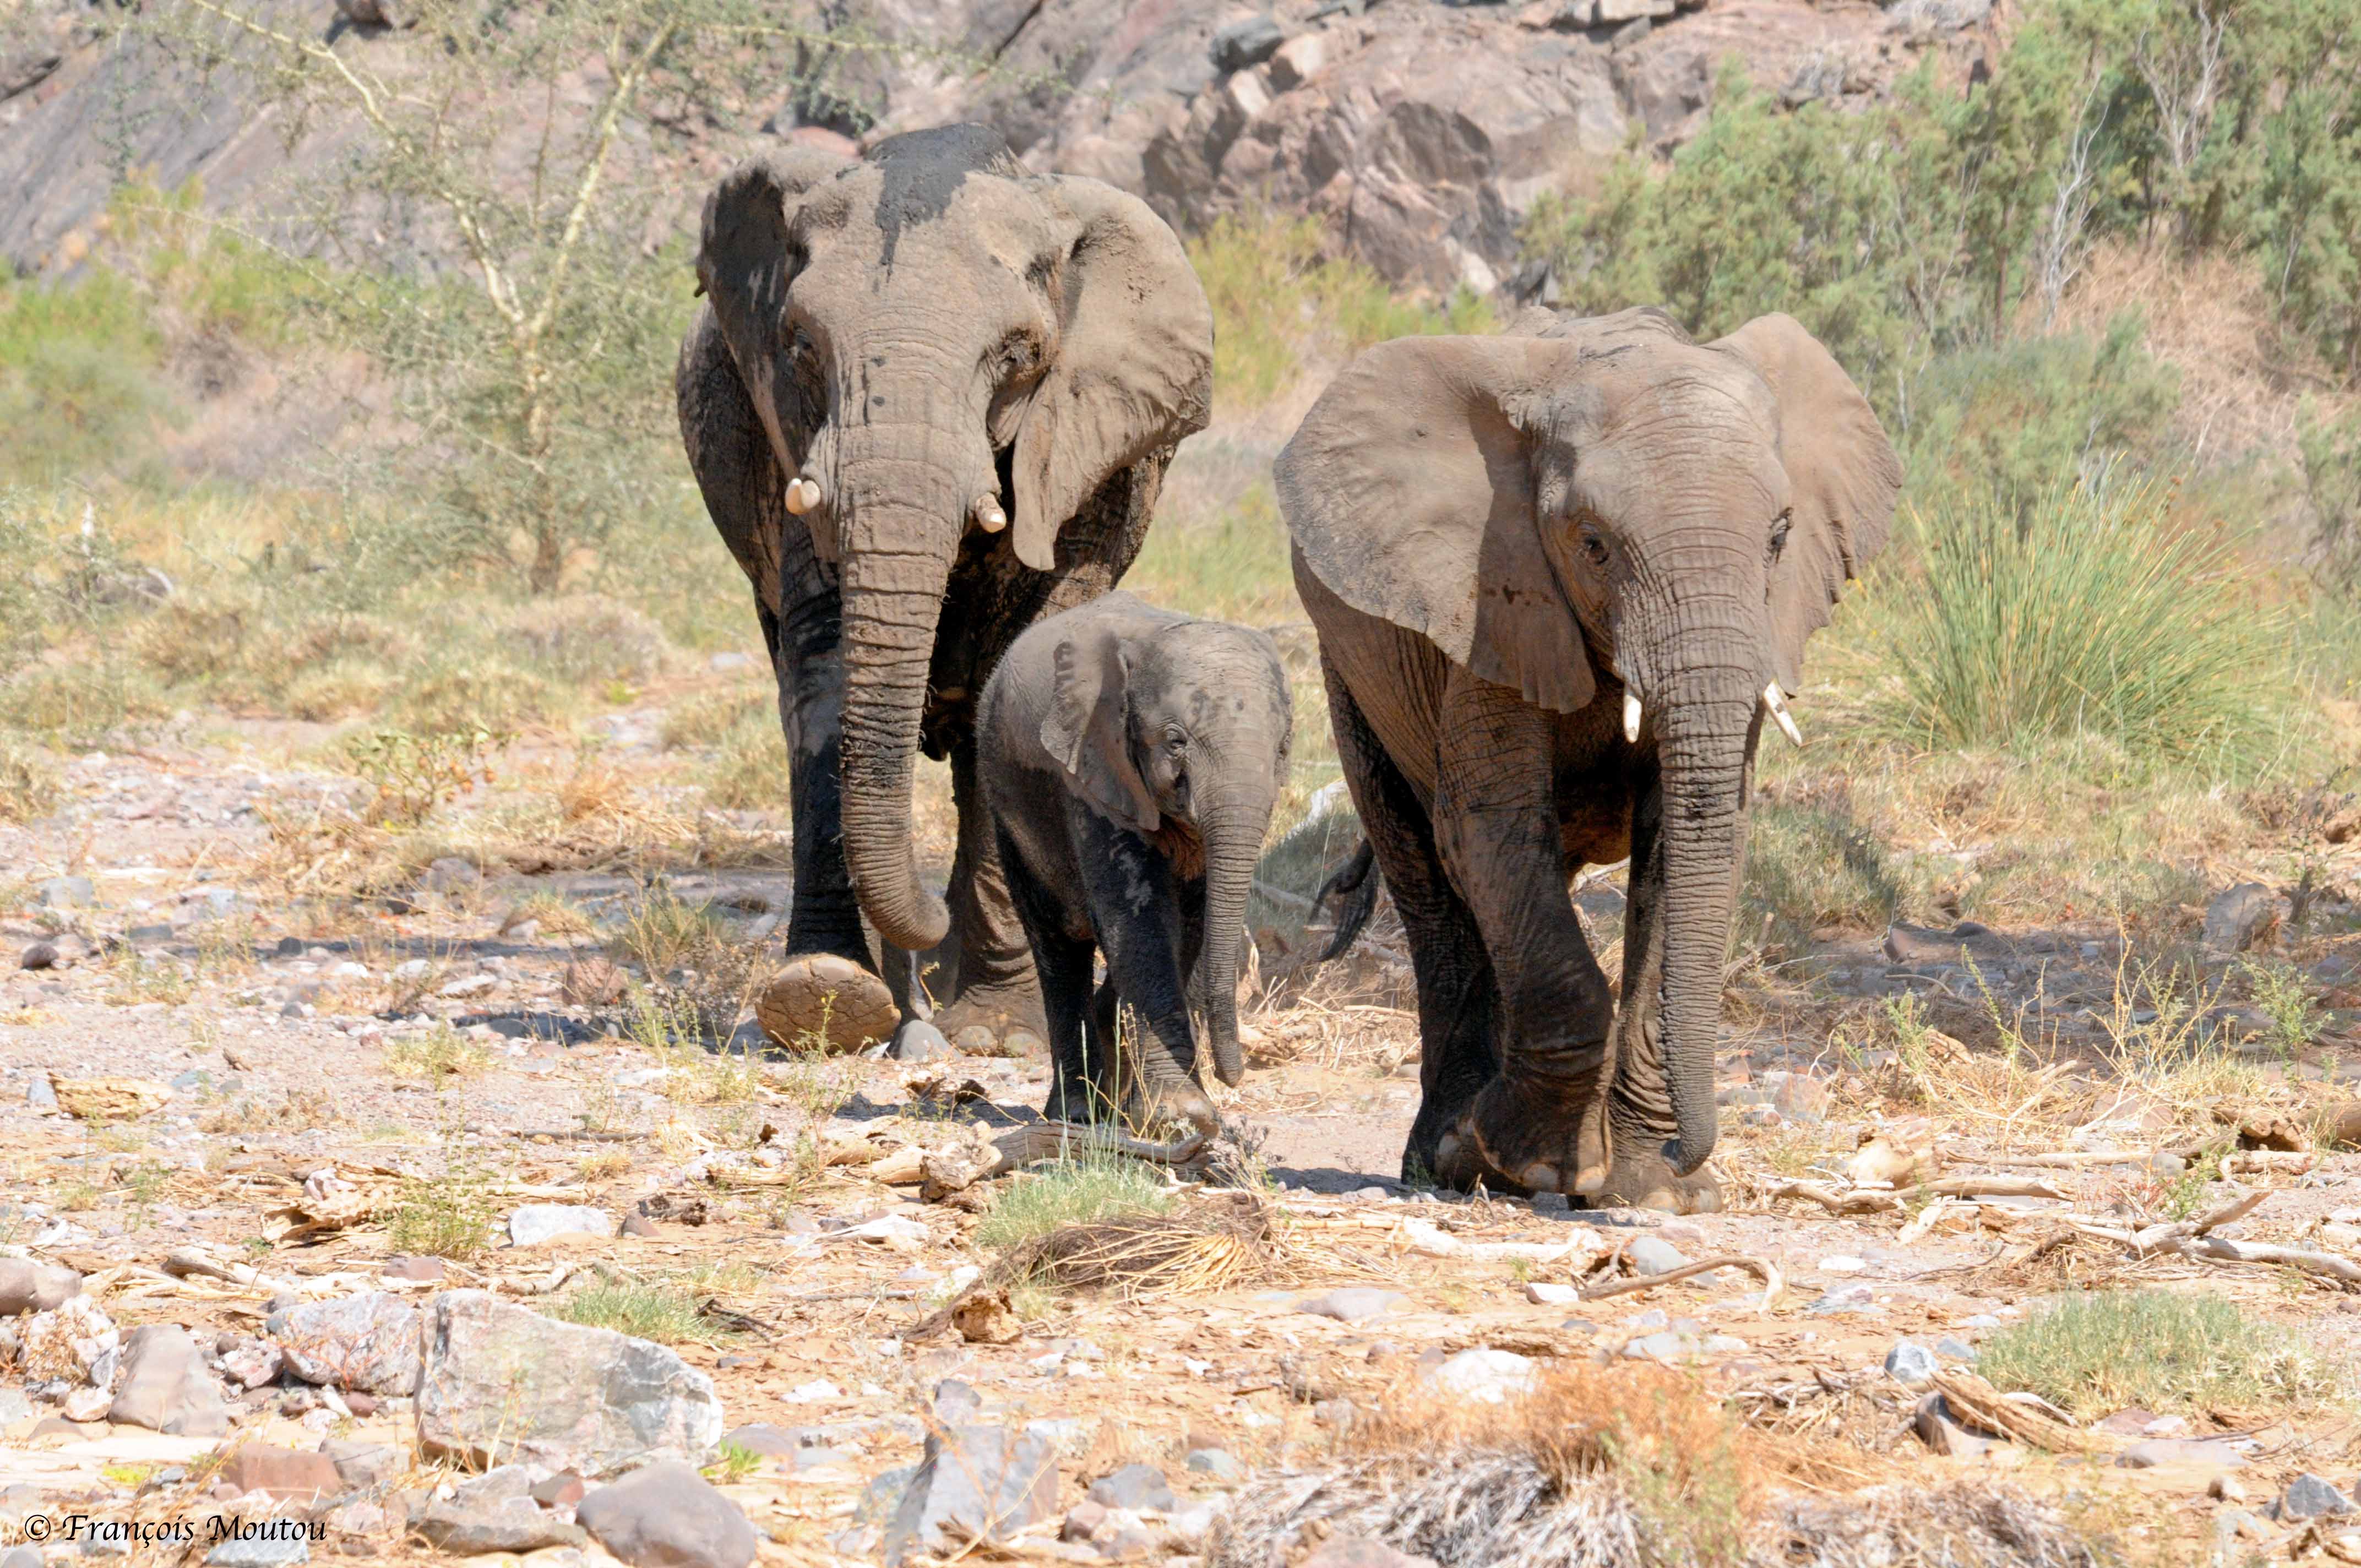  Desert elephants, Namibia